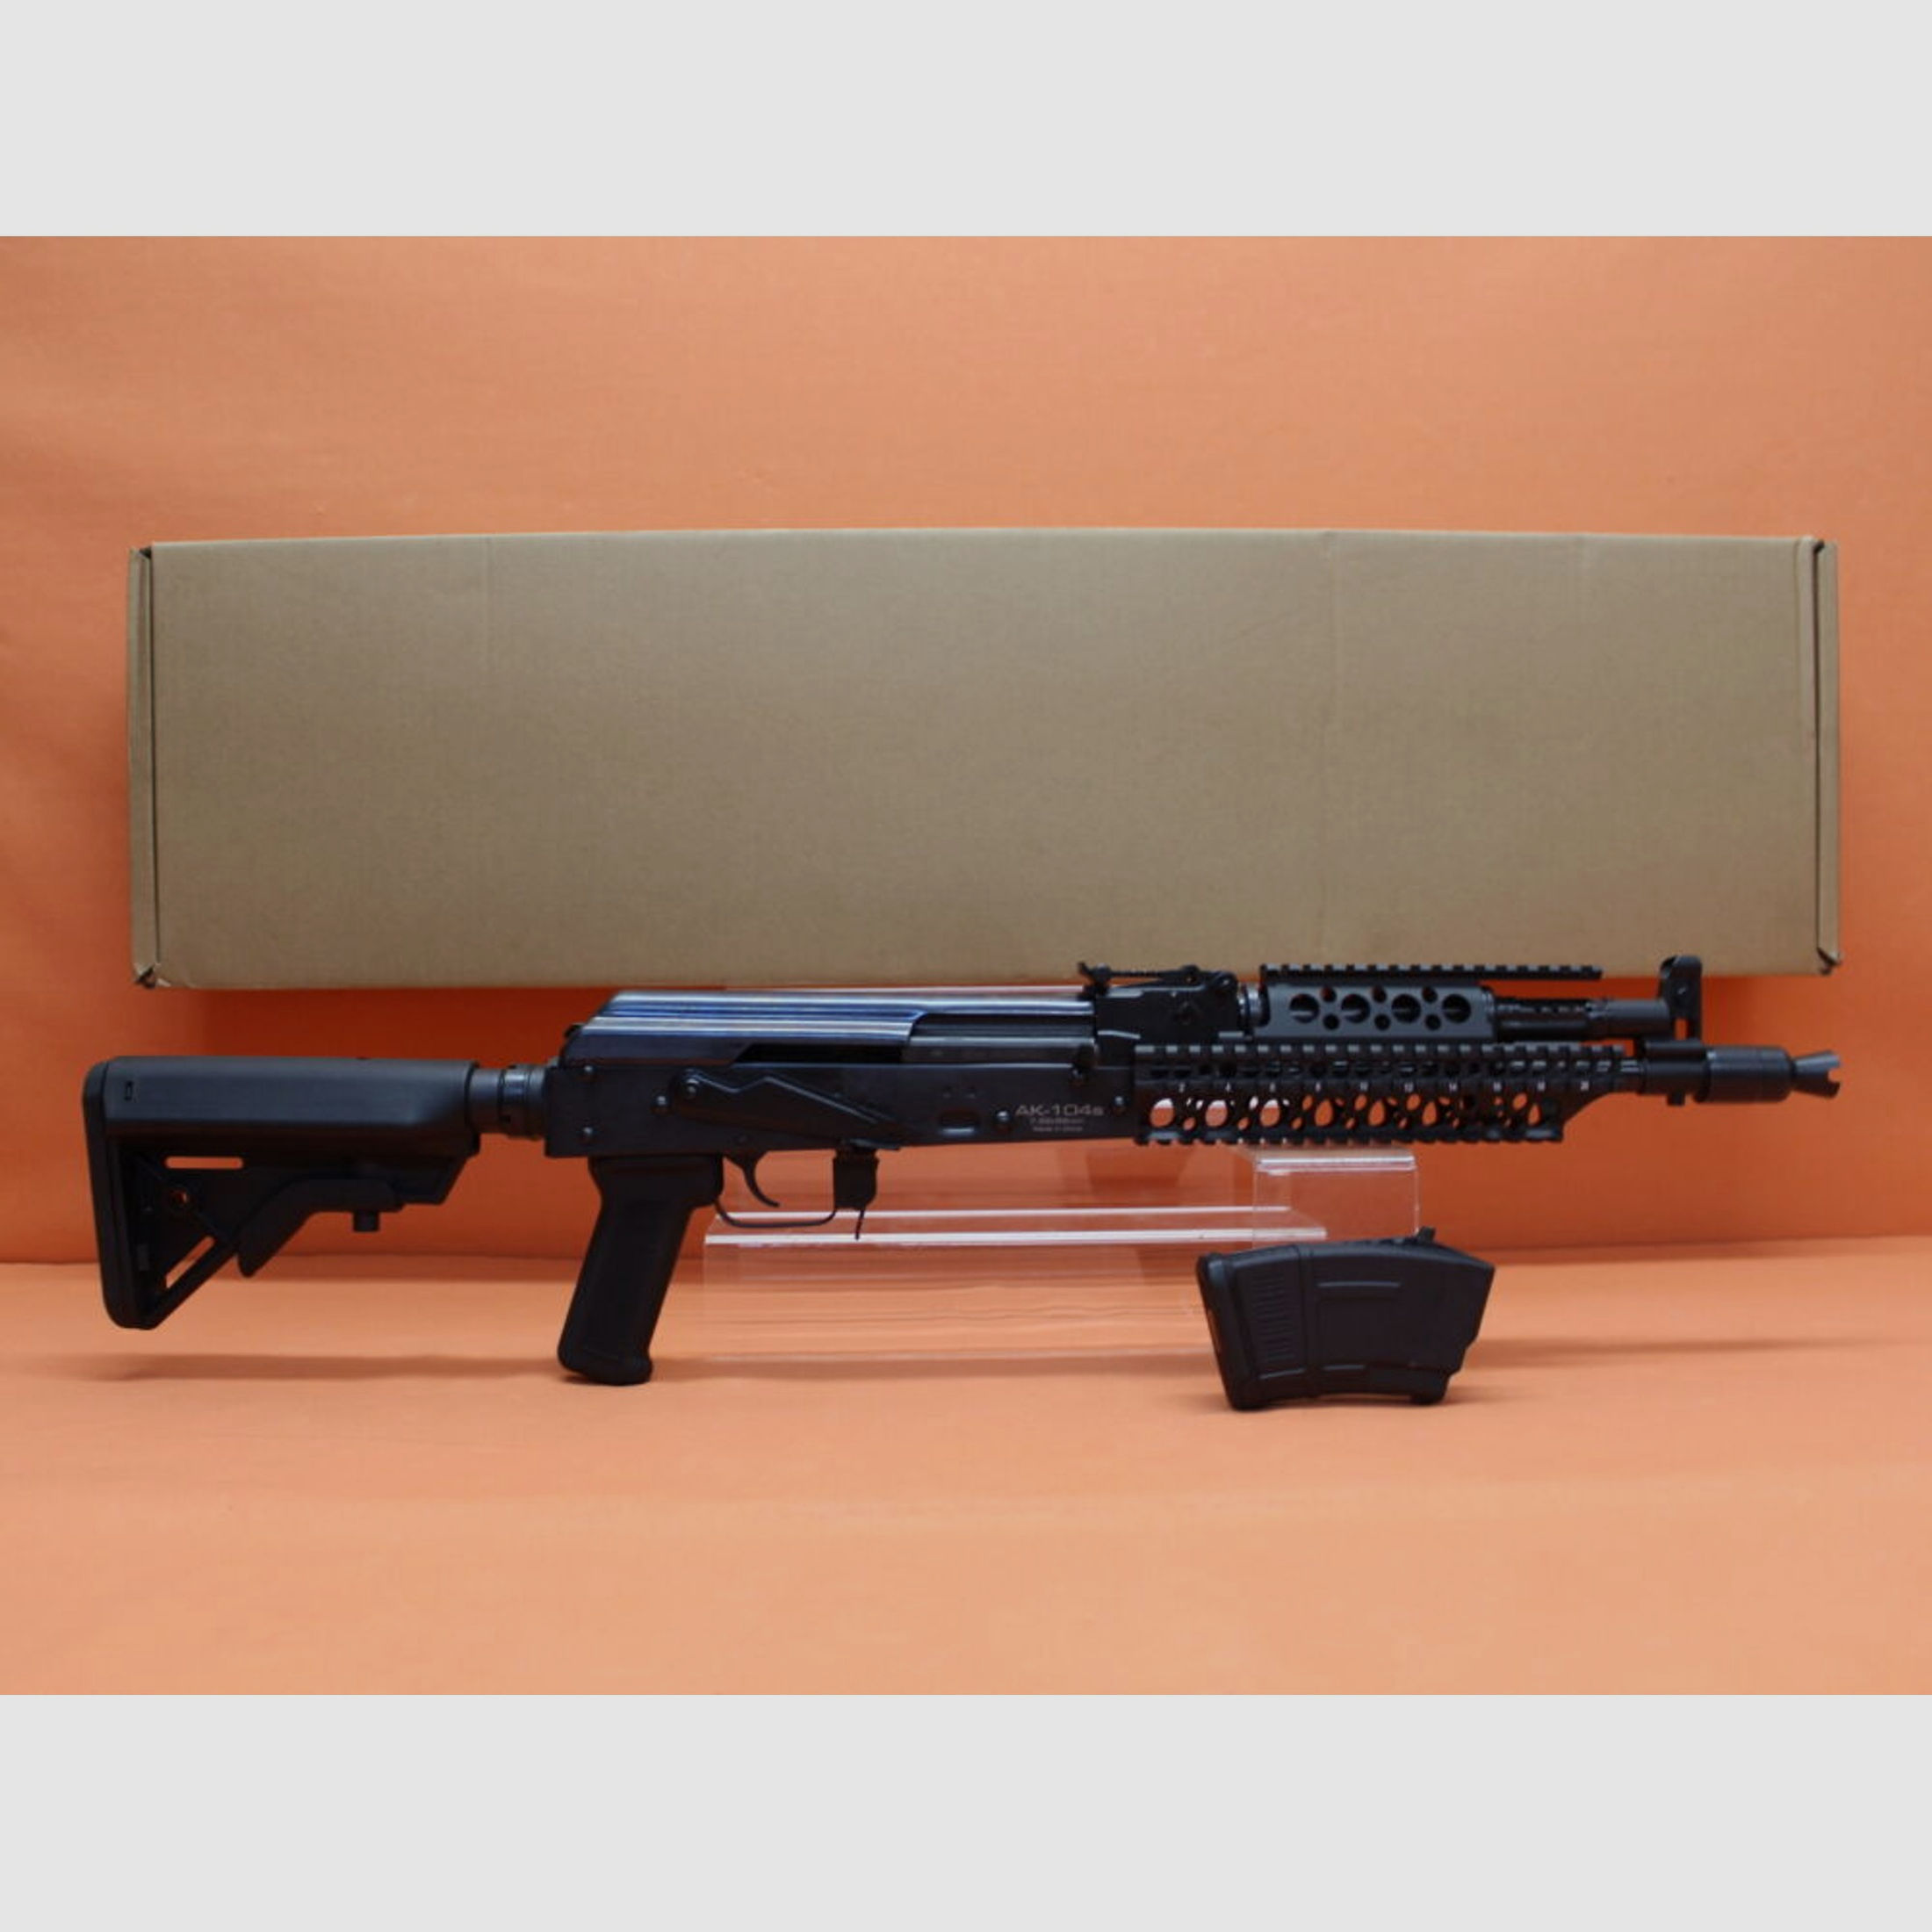 SDM Beijing	 Ha.Büchse 7,62x39 SDM AK-104s 12,5"/ 322mm Lauf/ 14mm Montageschiene/ Alu 4-Rail-System (AKM/AK47)